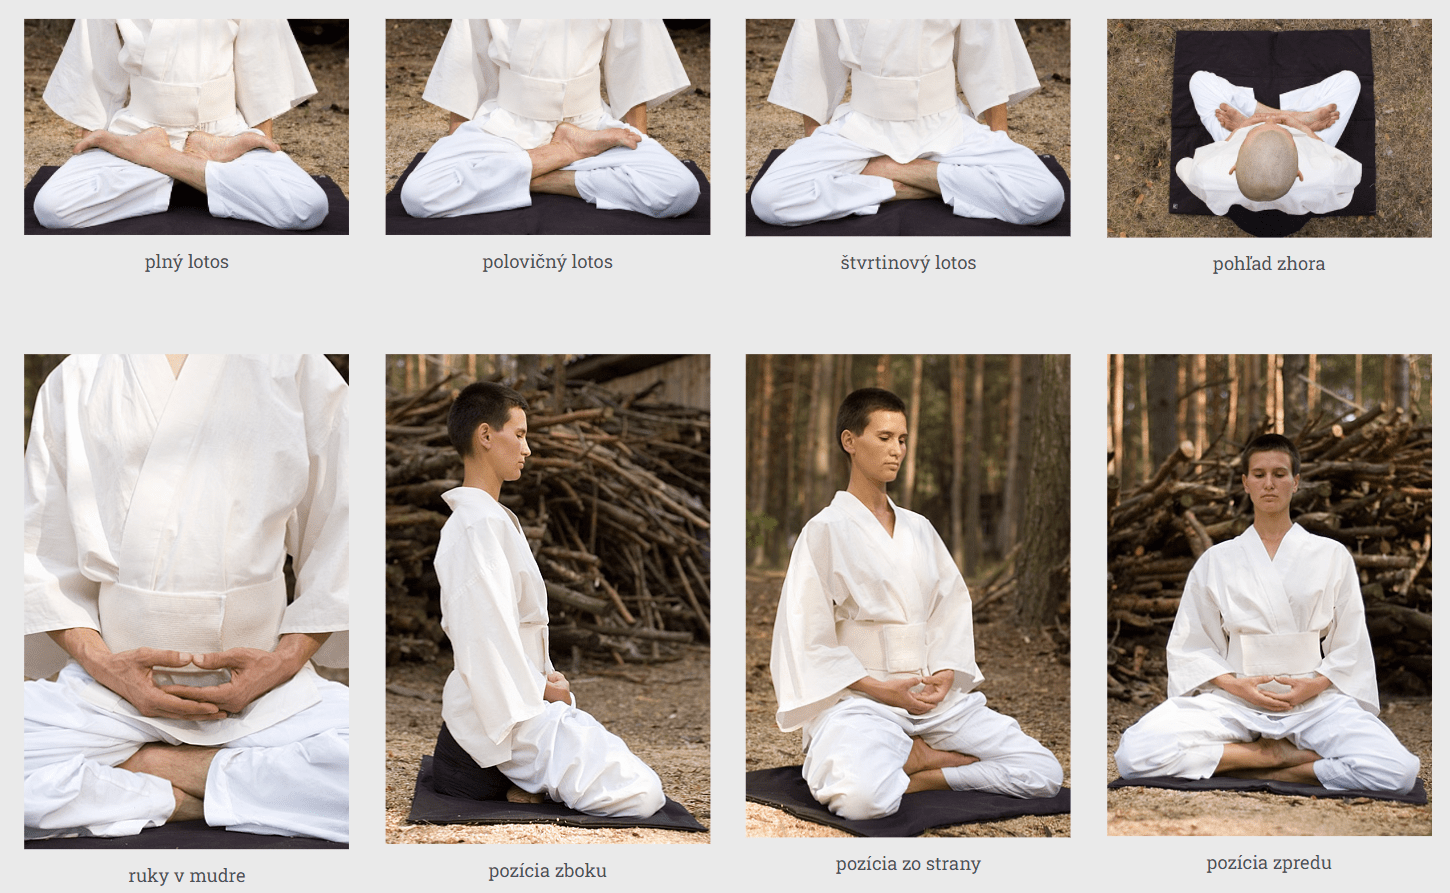 zenova meditácia, zenová meditácia, zen, zazen, meditácia